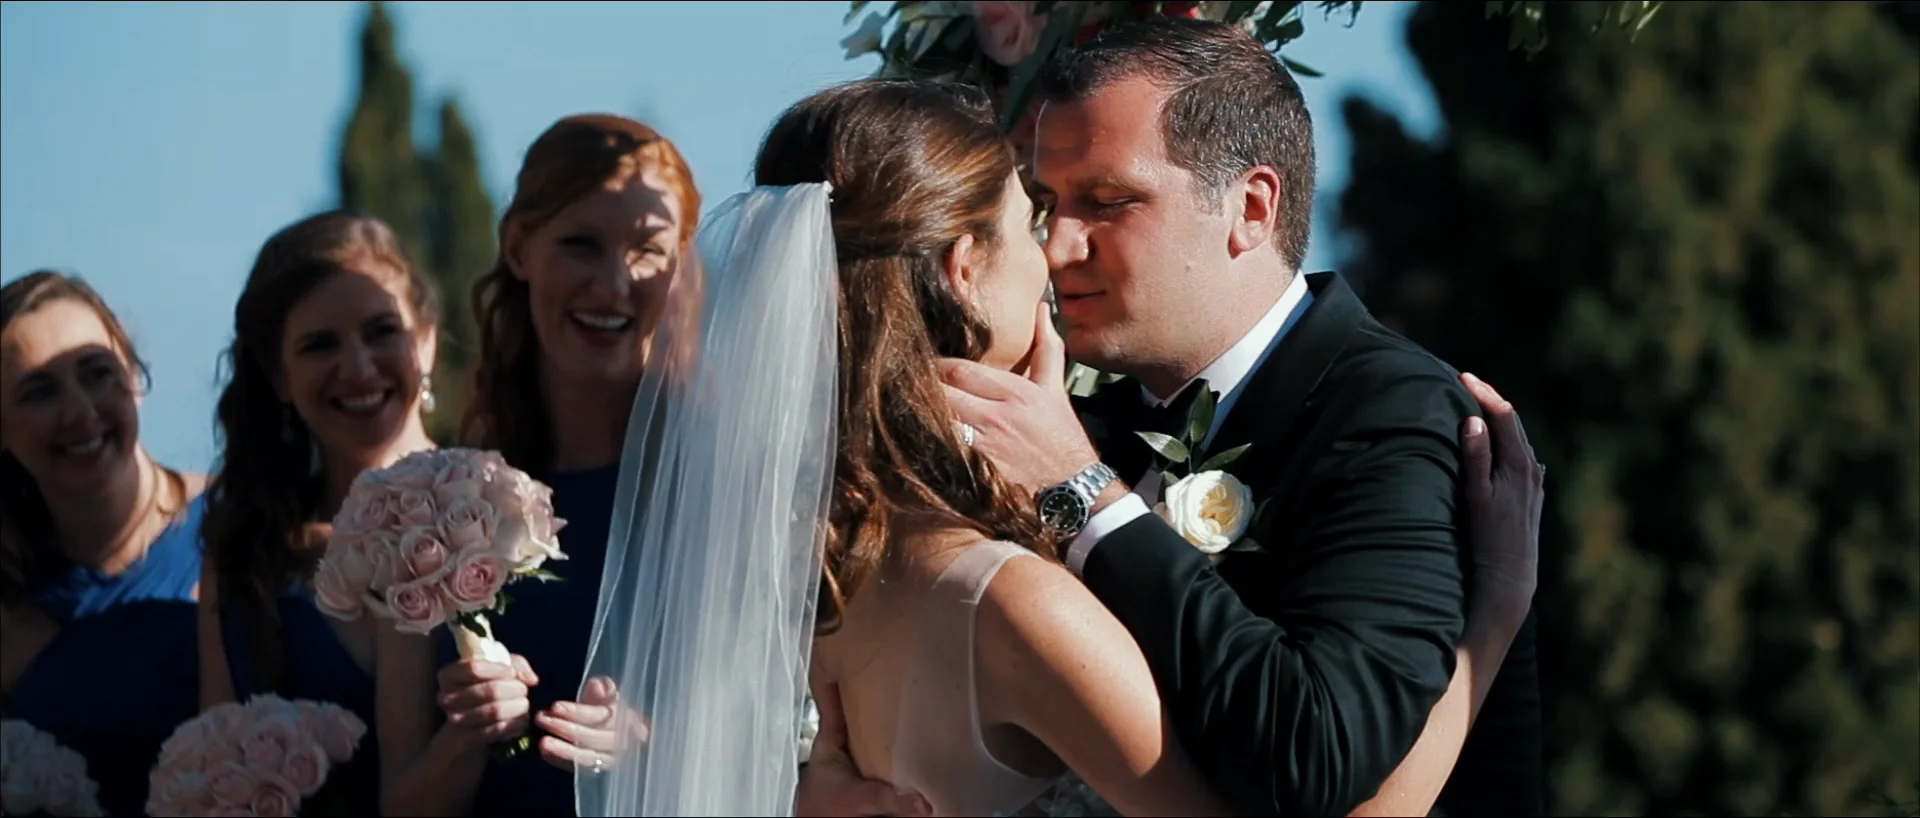 Luxury Wedding in Taormina - Wedding Video - Belmond Timeo